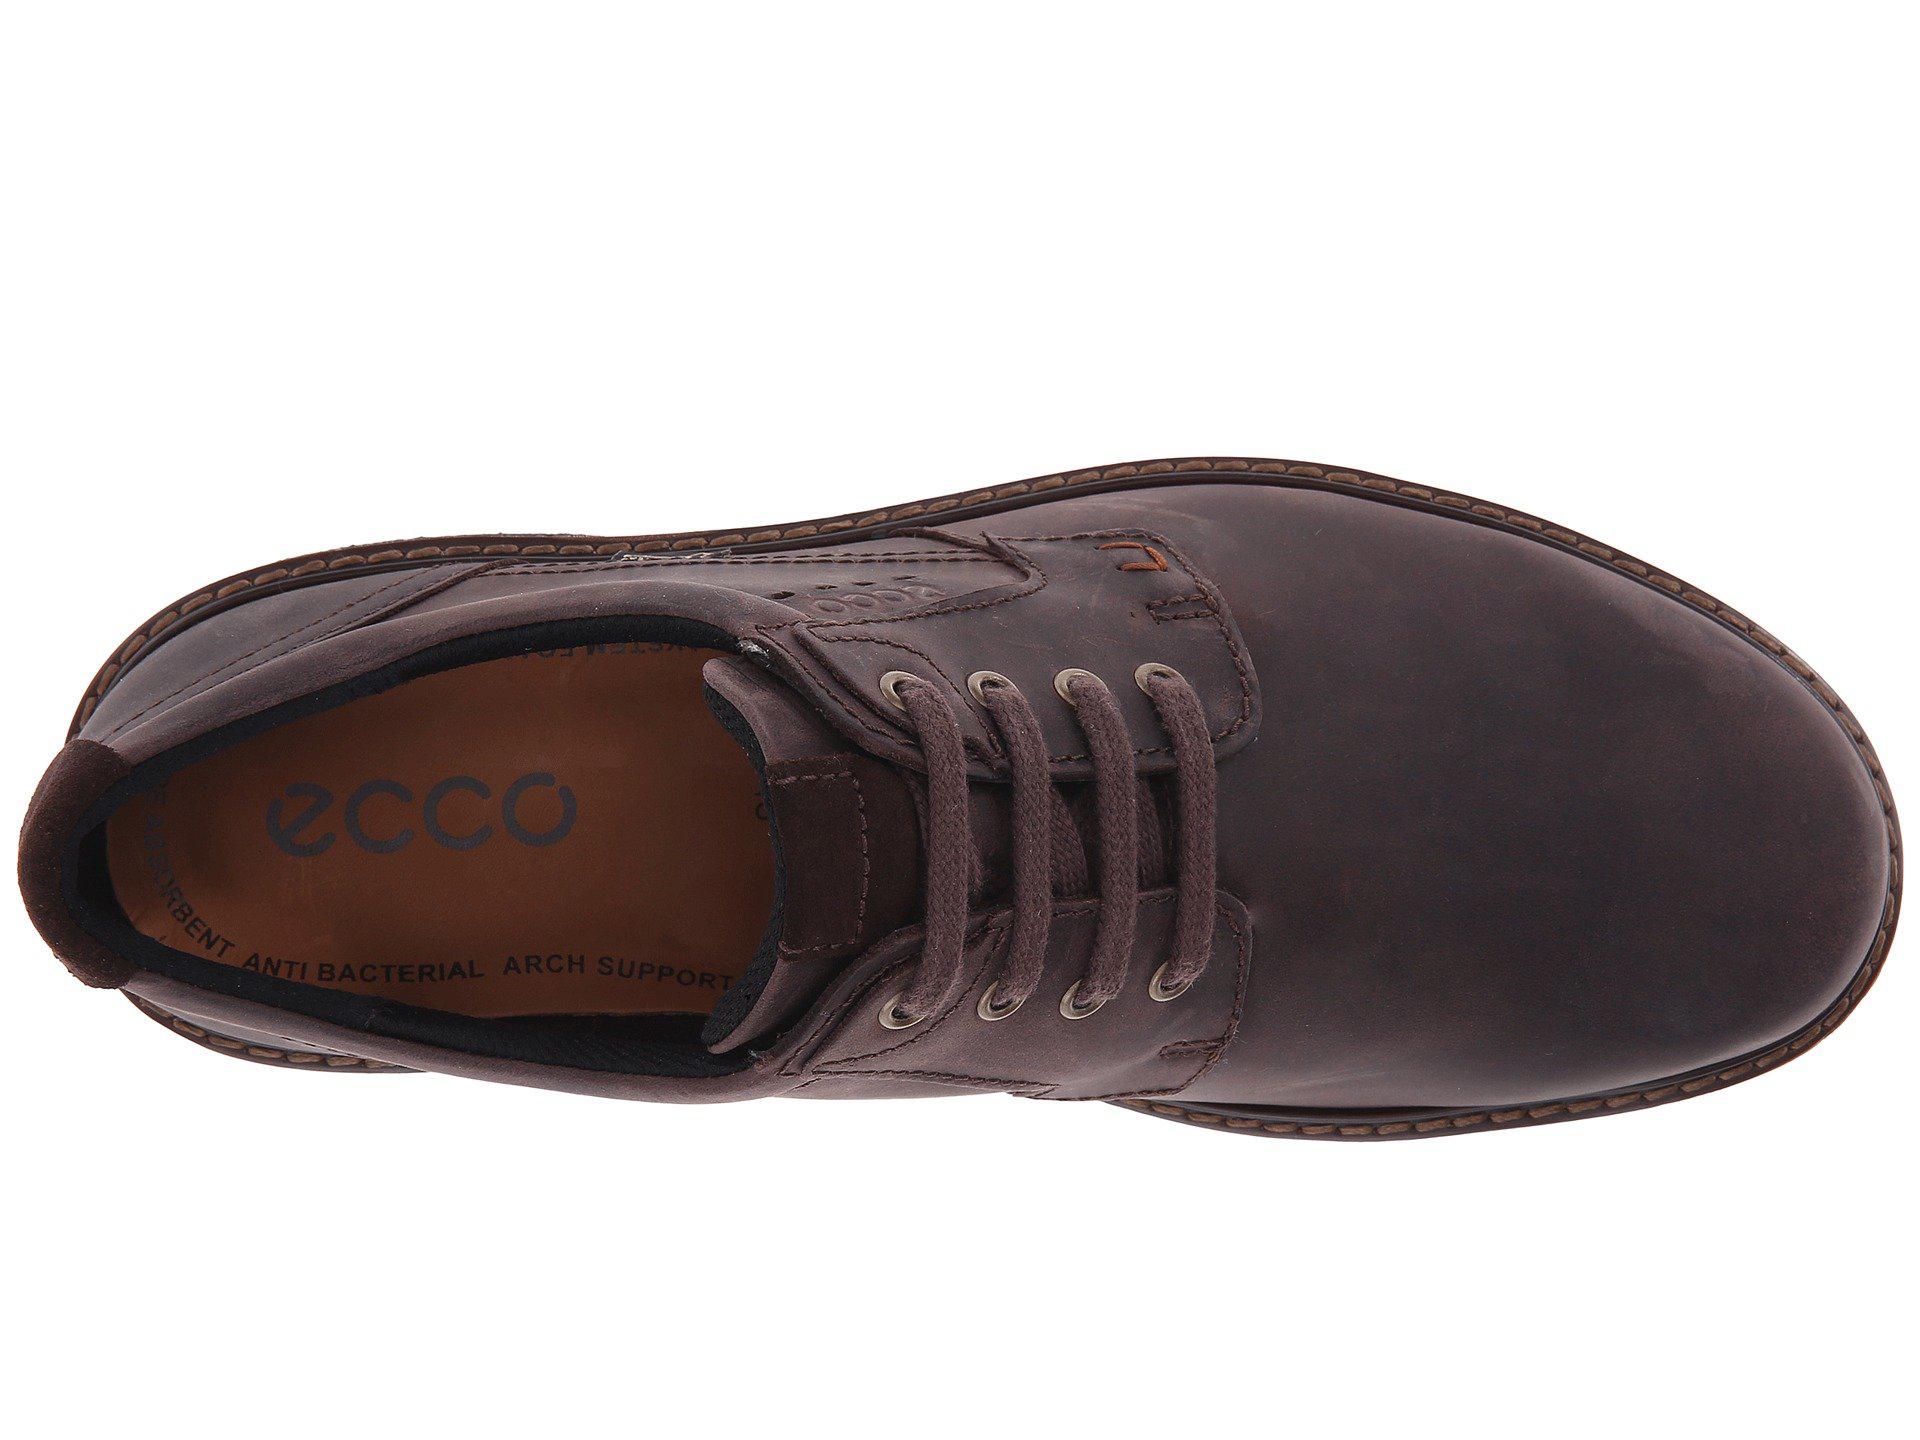 Ecco Leather Turn Gtx(r) Plain Toe Tie (mocha/mocha) Men's Plain Toe Shoes  in Coffee/Black/Espresso (Brown) for Men - Lyst